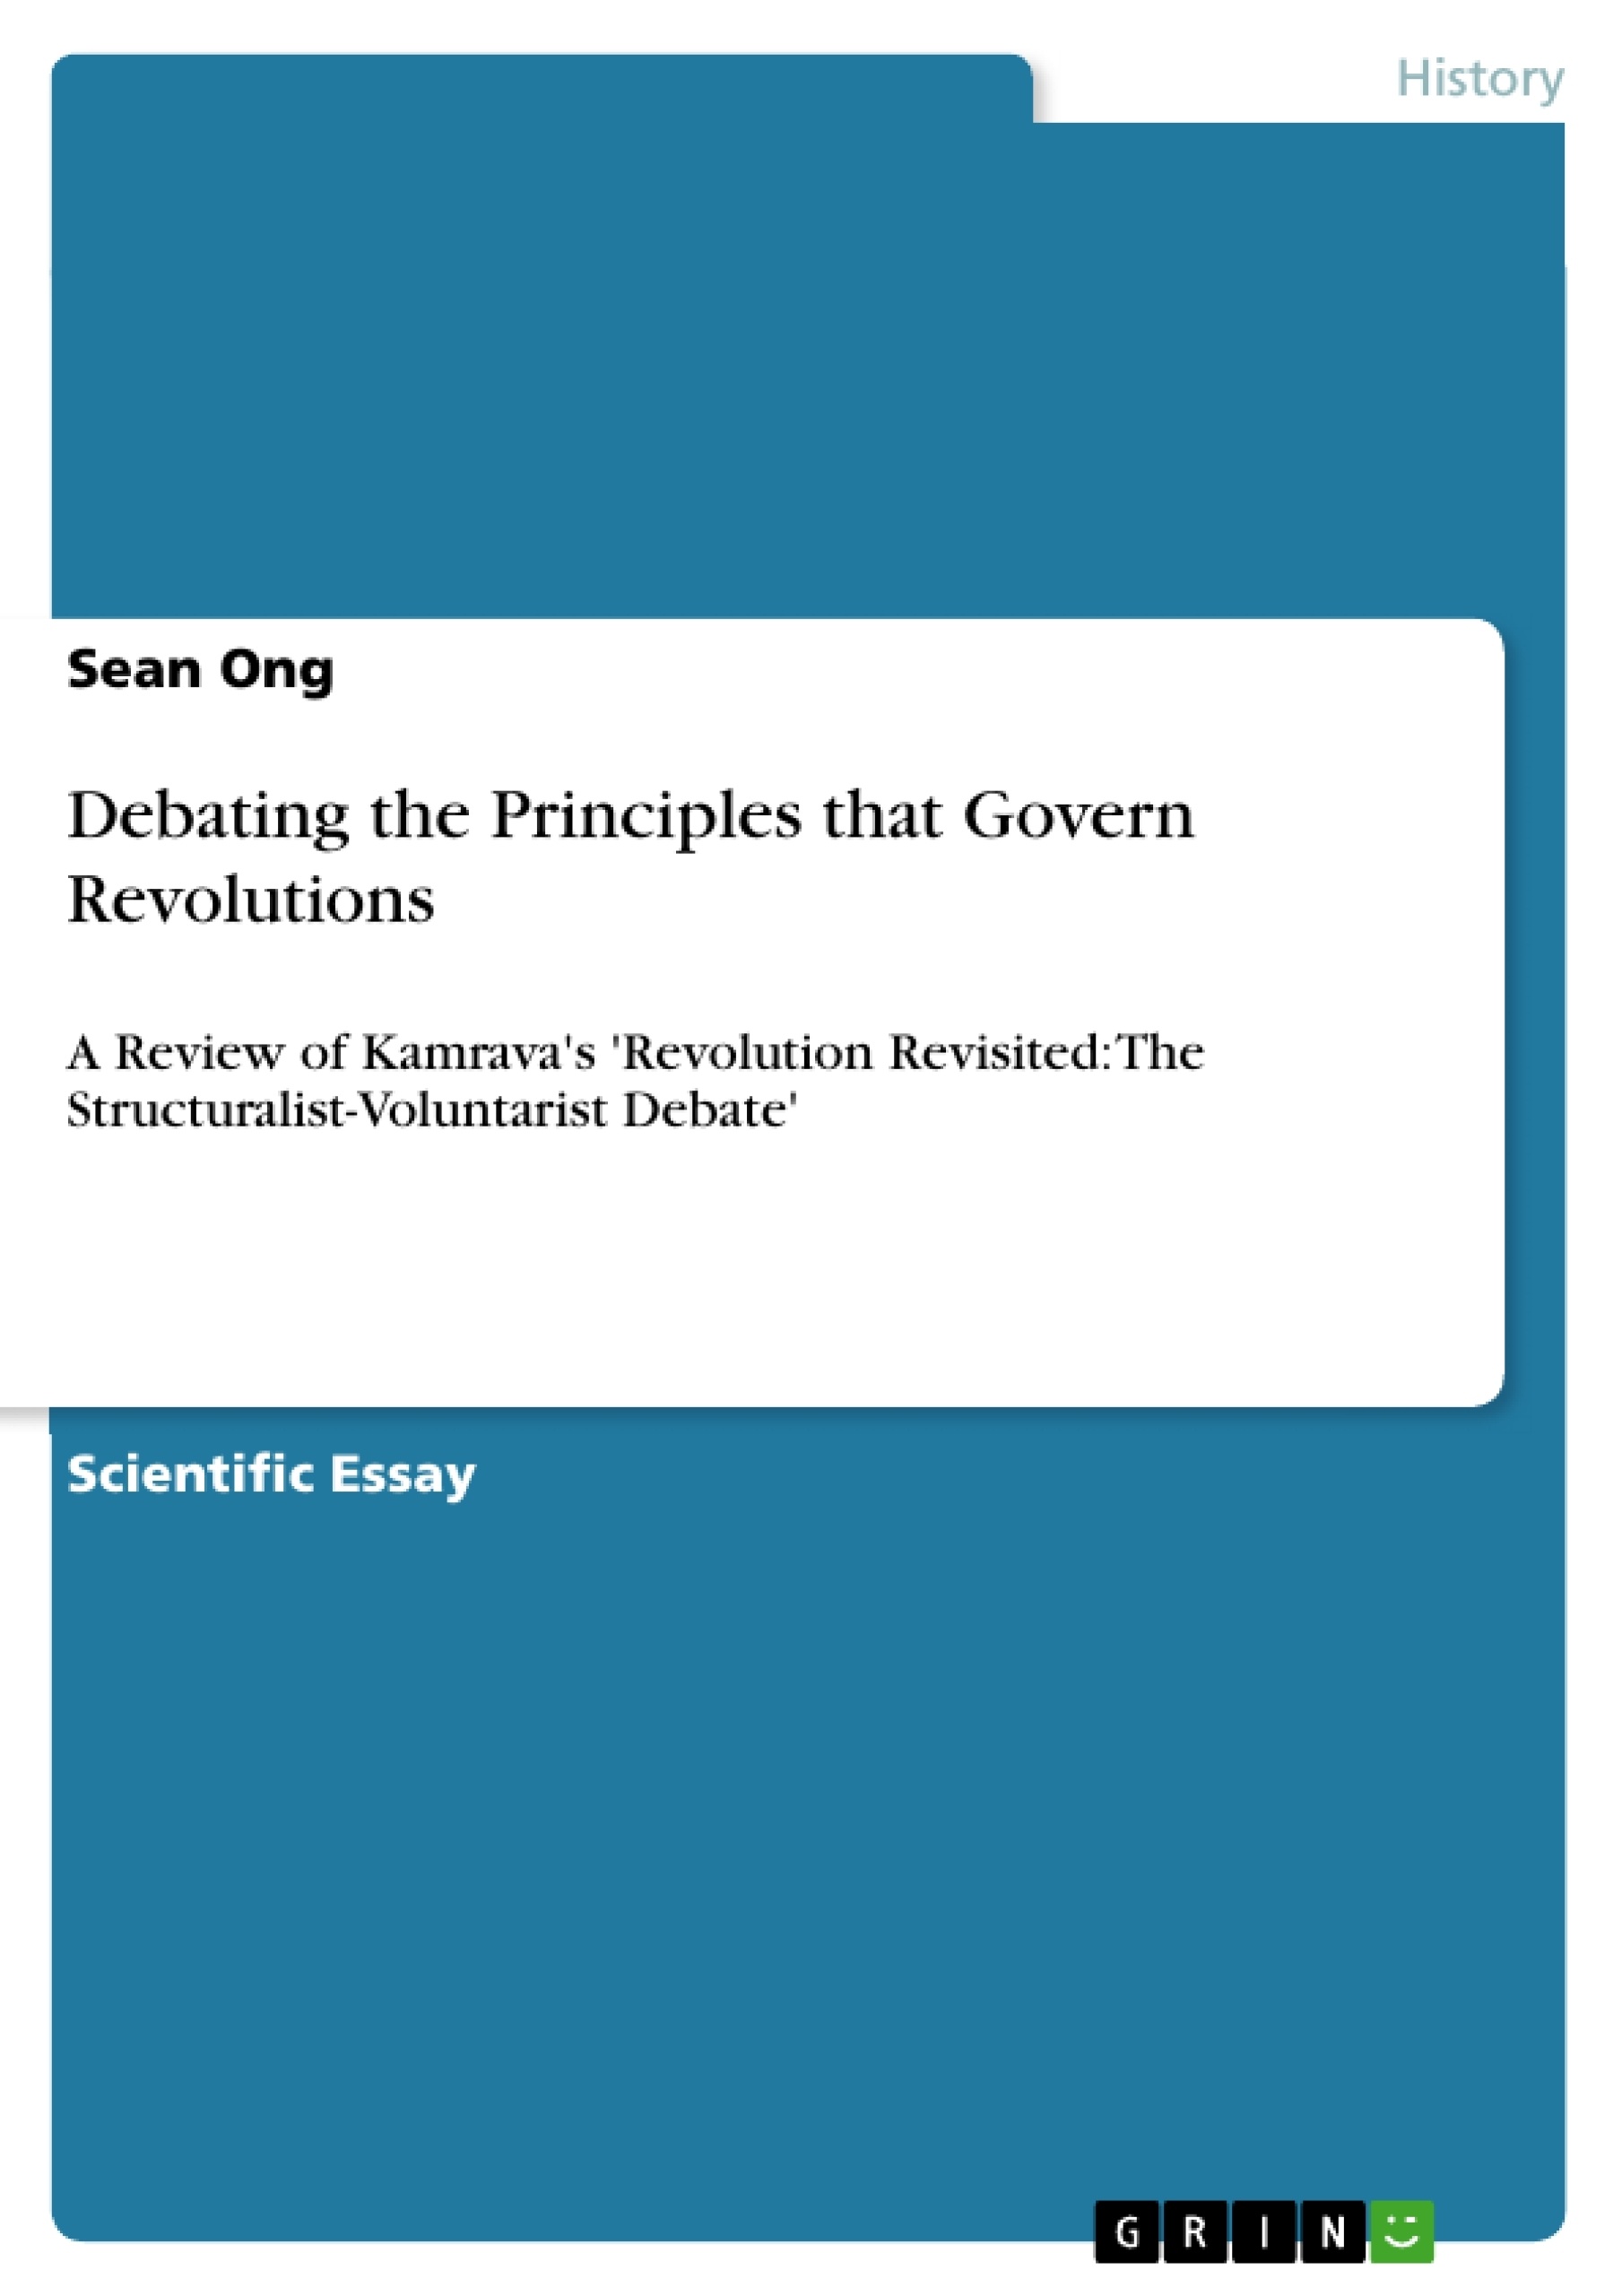 Titel: Debating the Principles that Govern Revolutions